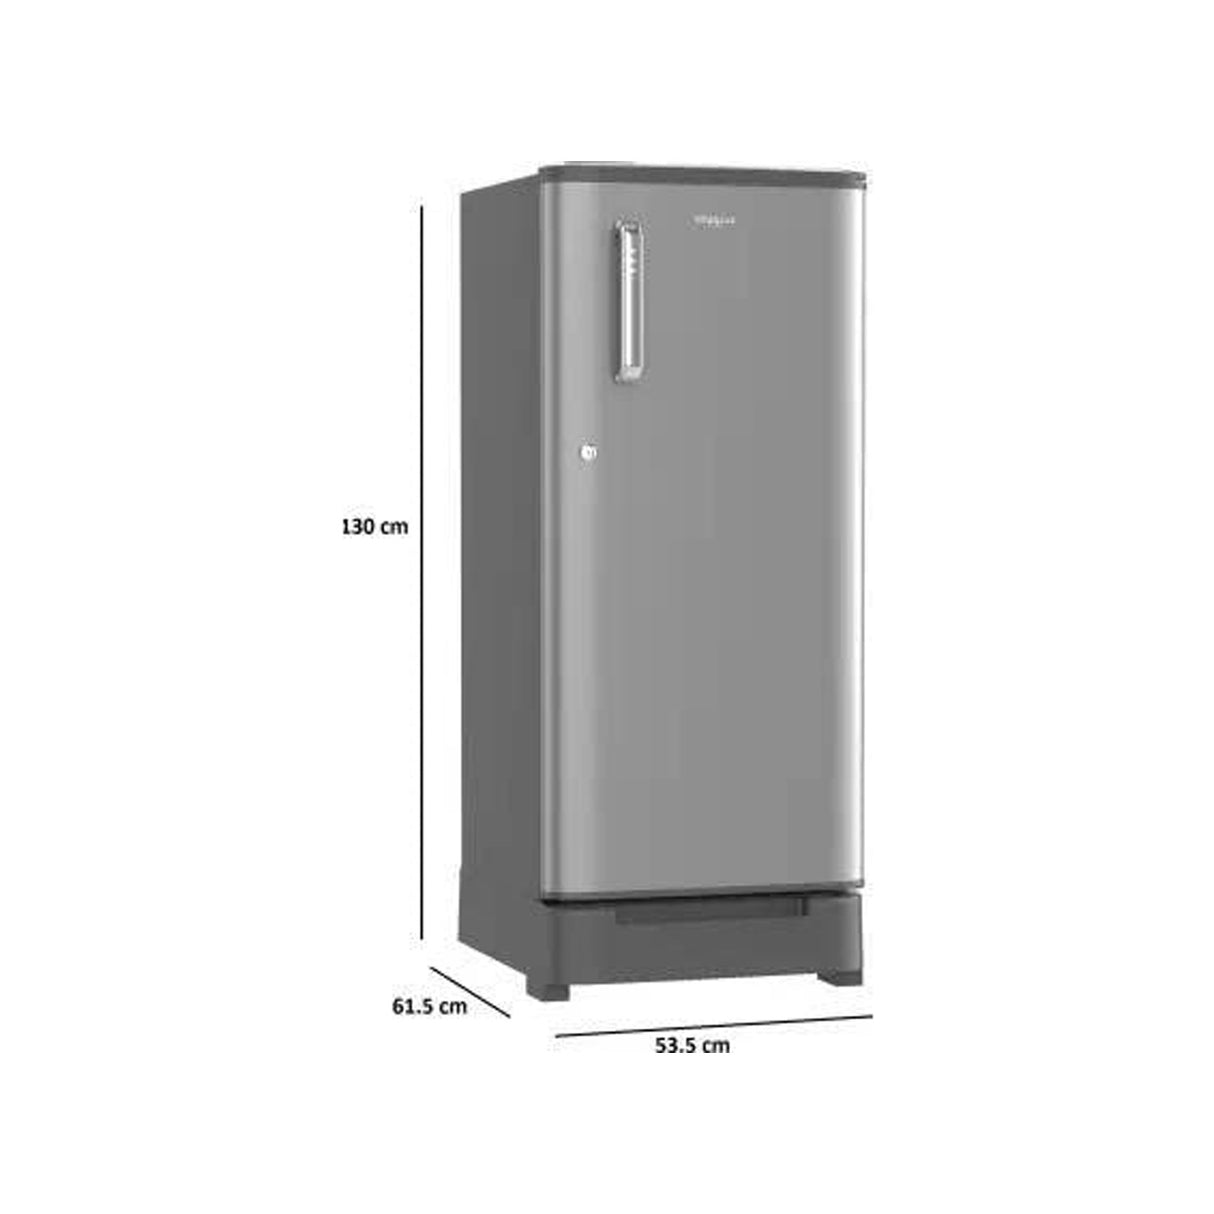 Whirlpool Refrigerator 190L 2-Star (Roy Arctic Steel) (W.POOL REF 72504)